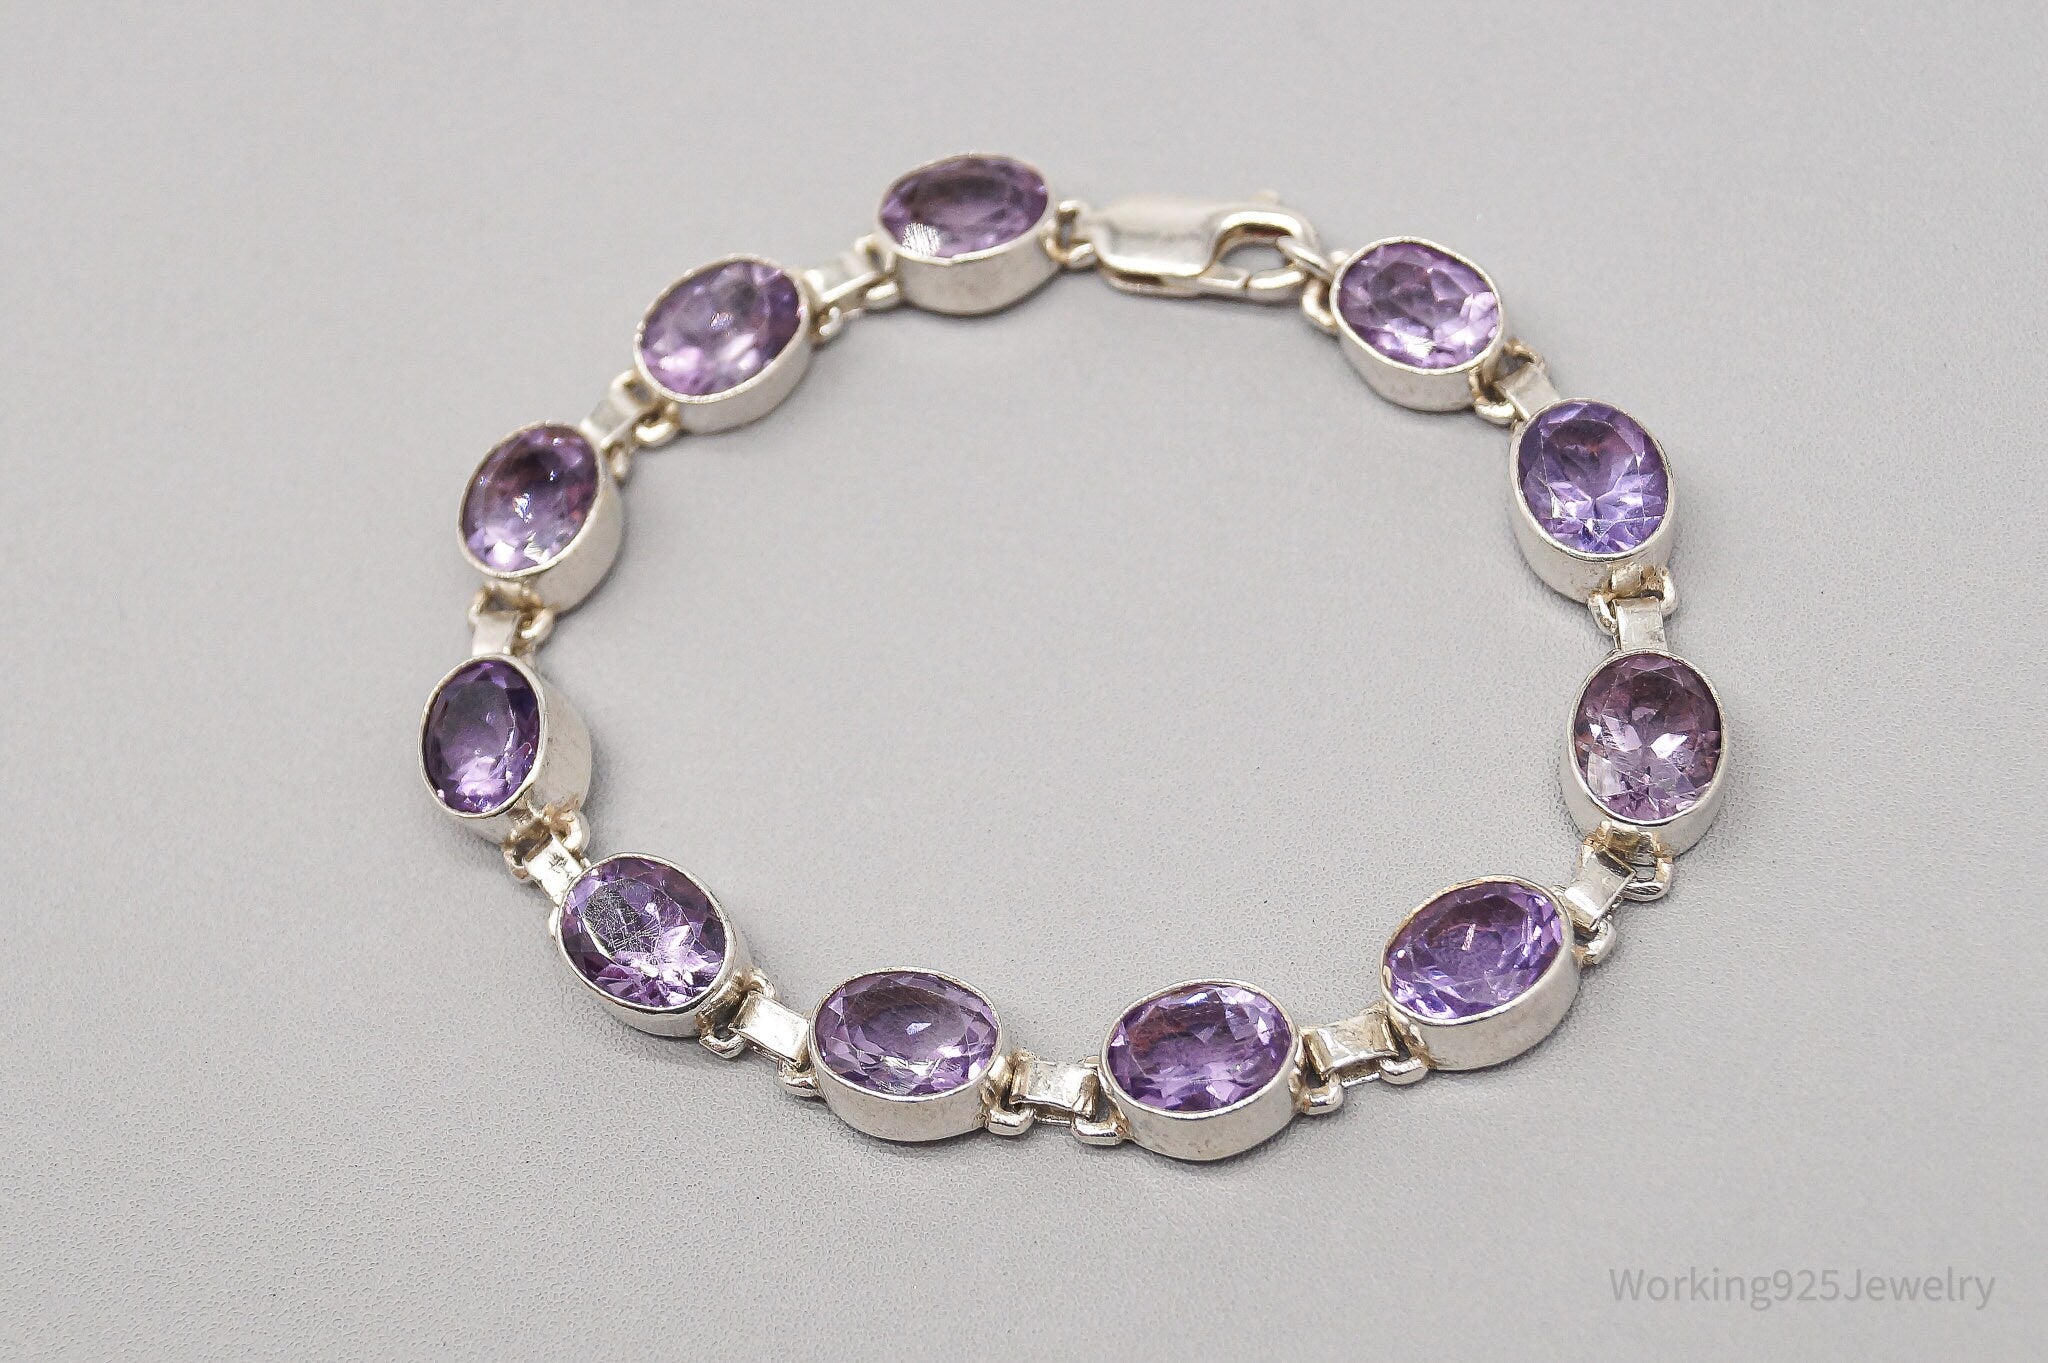 Vintage Purple Amethyst Sterling Silver Bracelet - 6 7/8"